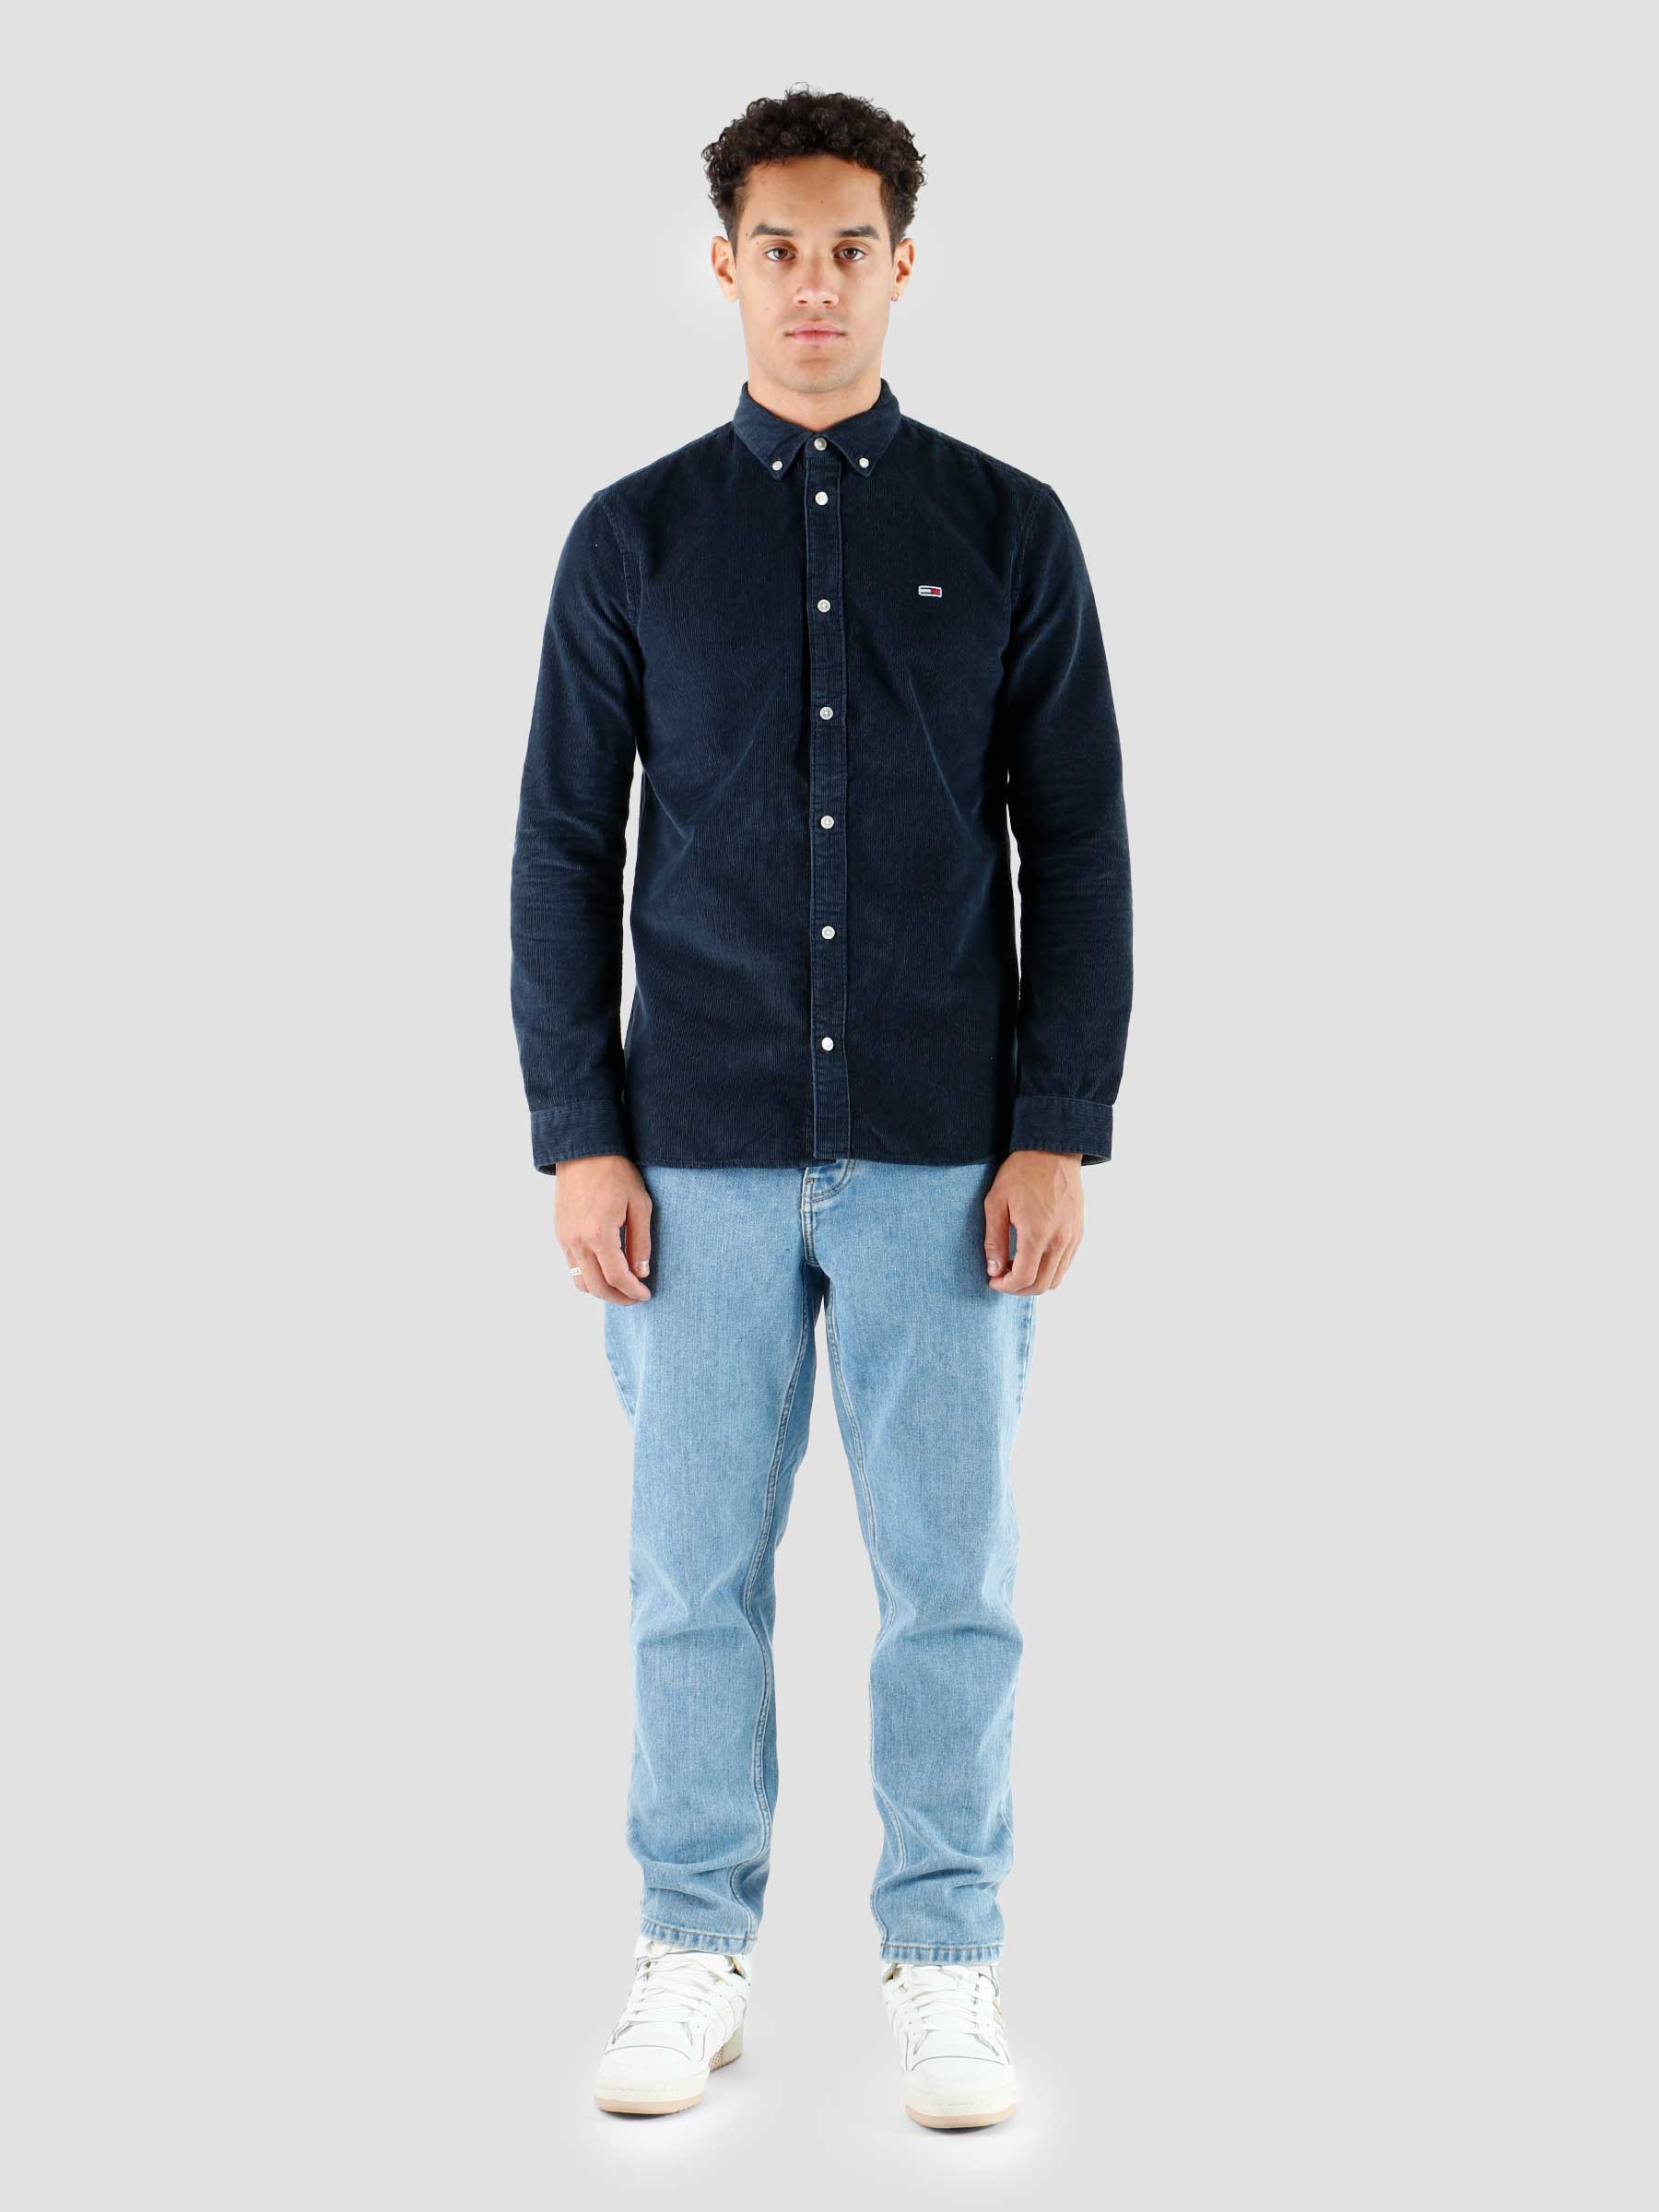 Solid Jeans Tommy Shirt Navy TJM Twilight - Cord Freshcotton